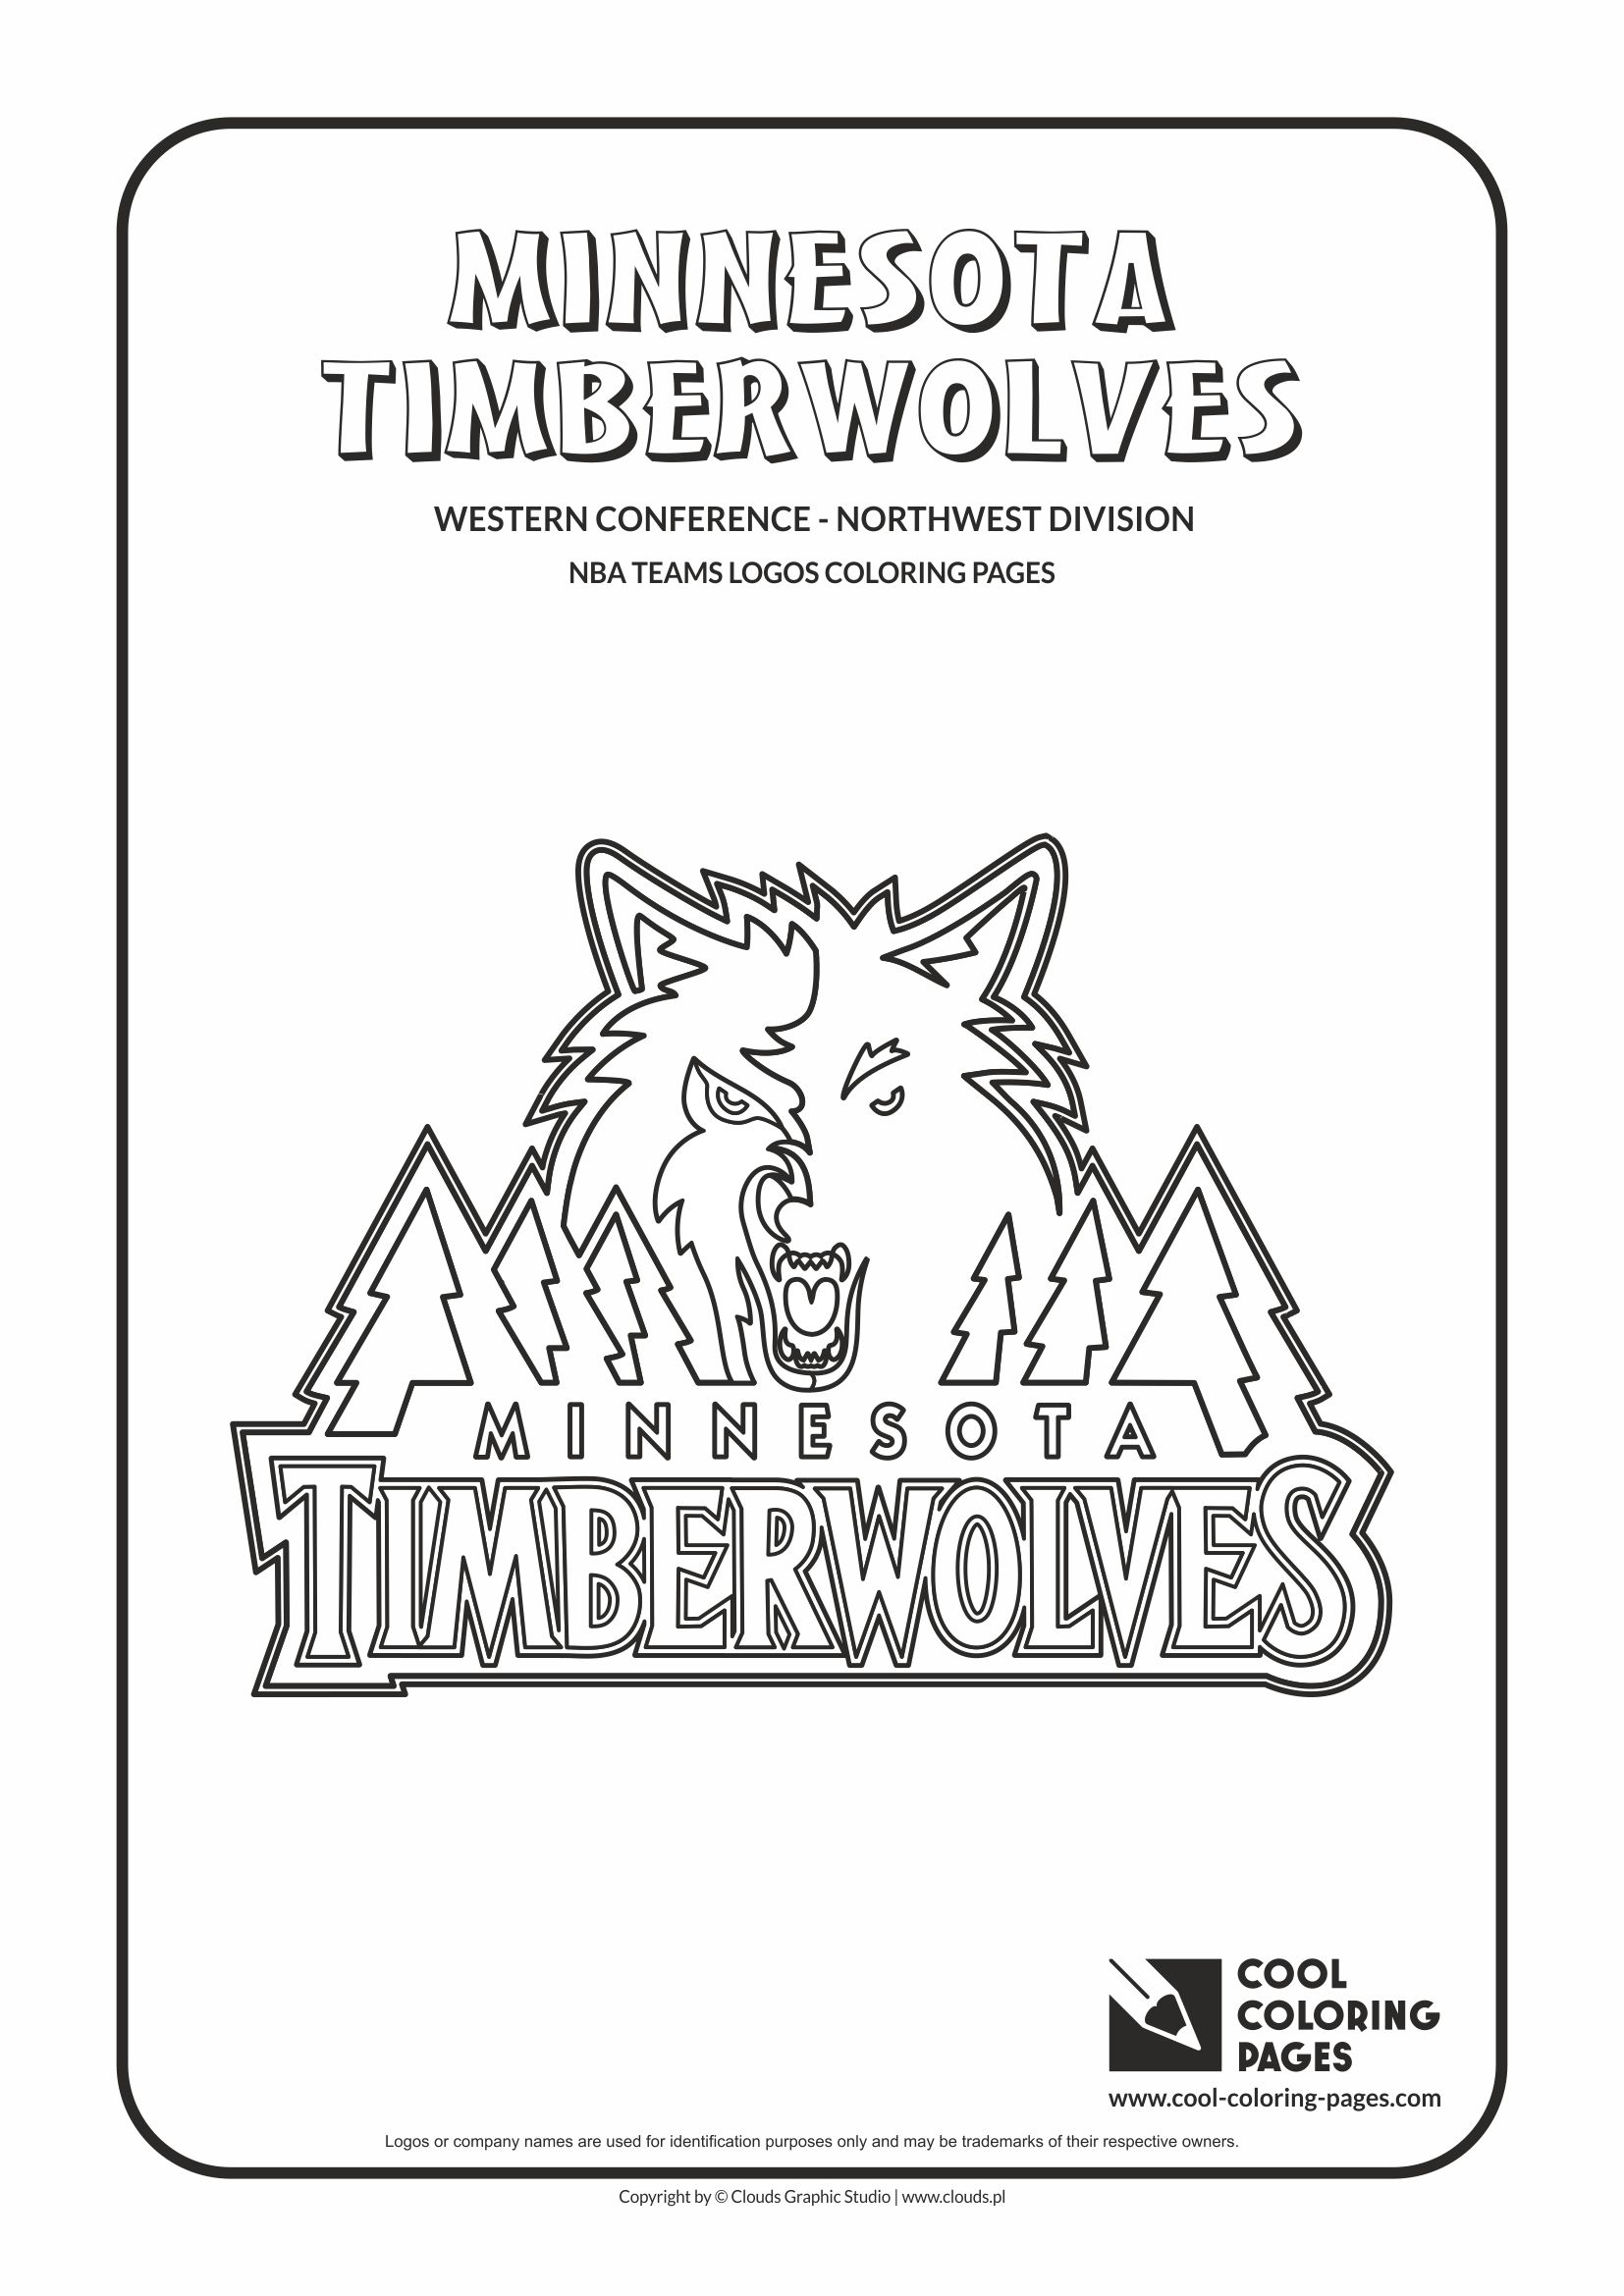 Cool Coloring Pages Minnesota Timberwolves - NBA basketball teams logos ...